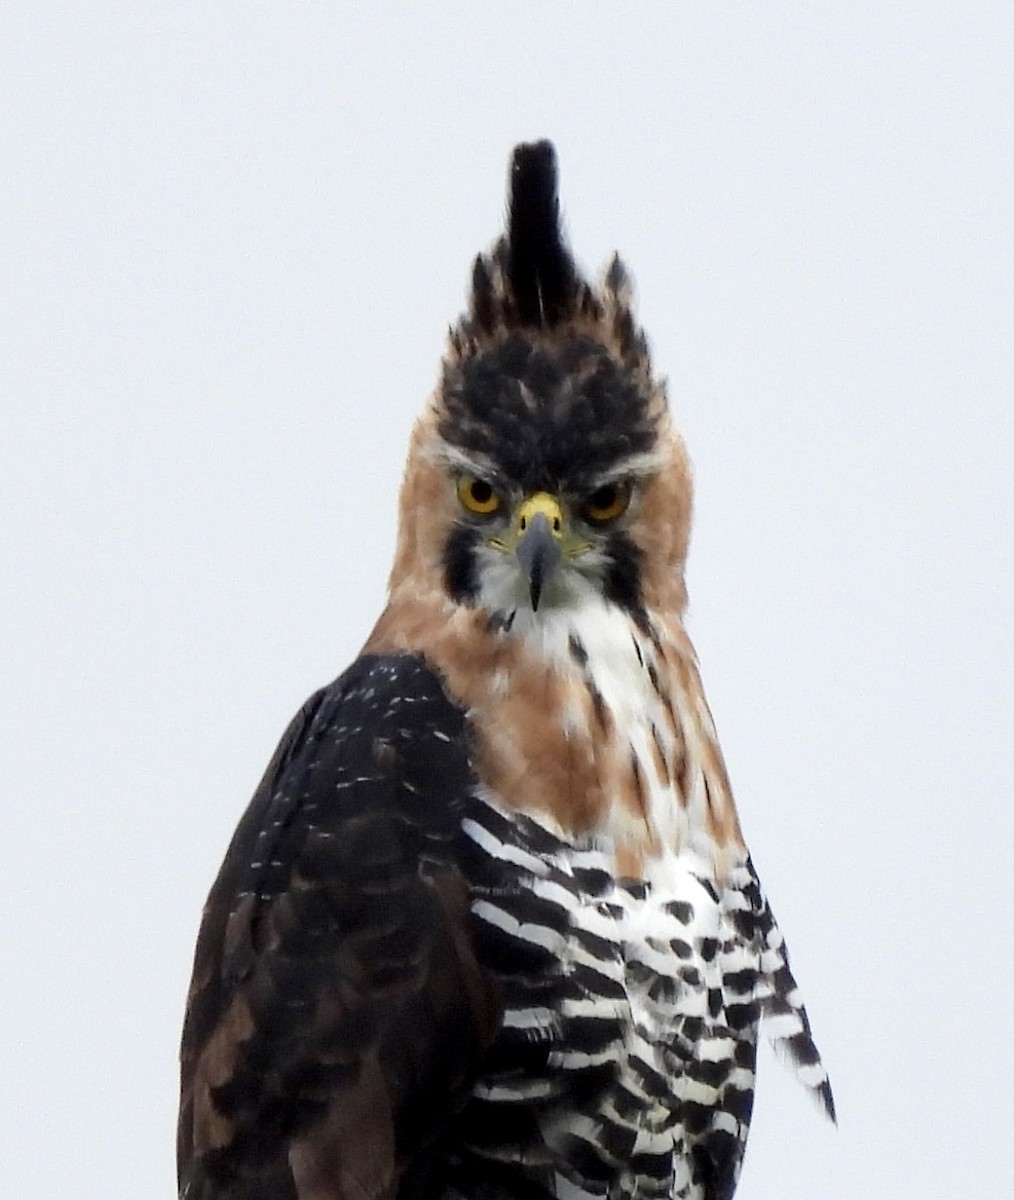 Ornate Hawk-Eagle - Anonymous